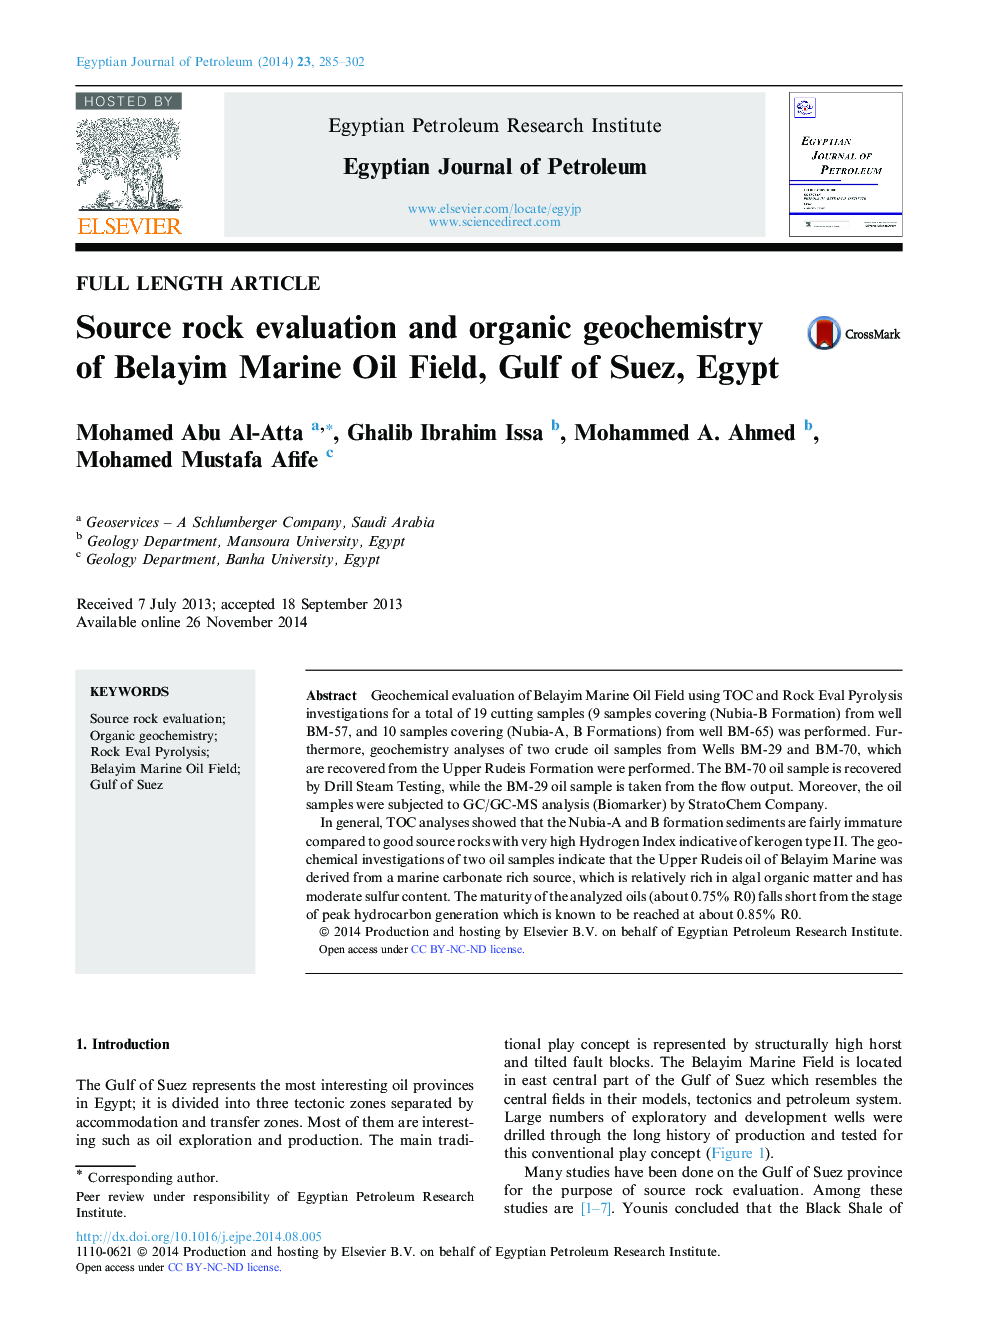 Source rock evaluation and organic geochemistry of Belayim Marine Oil Field, Gulf of Suez, Egypt 